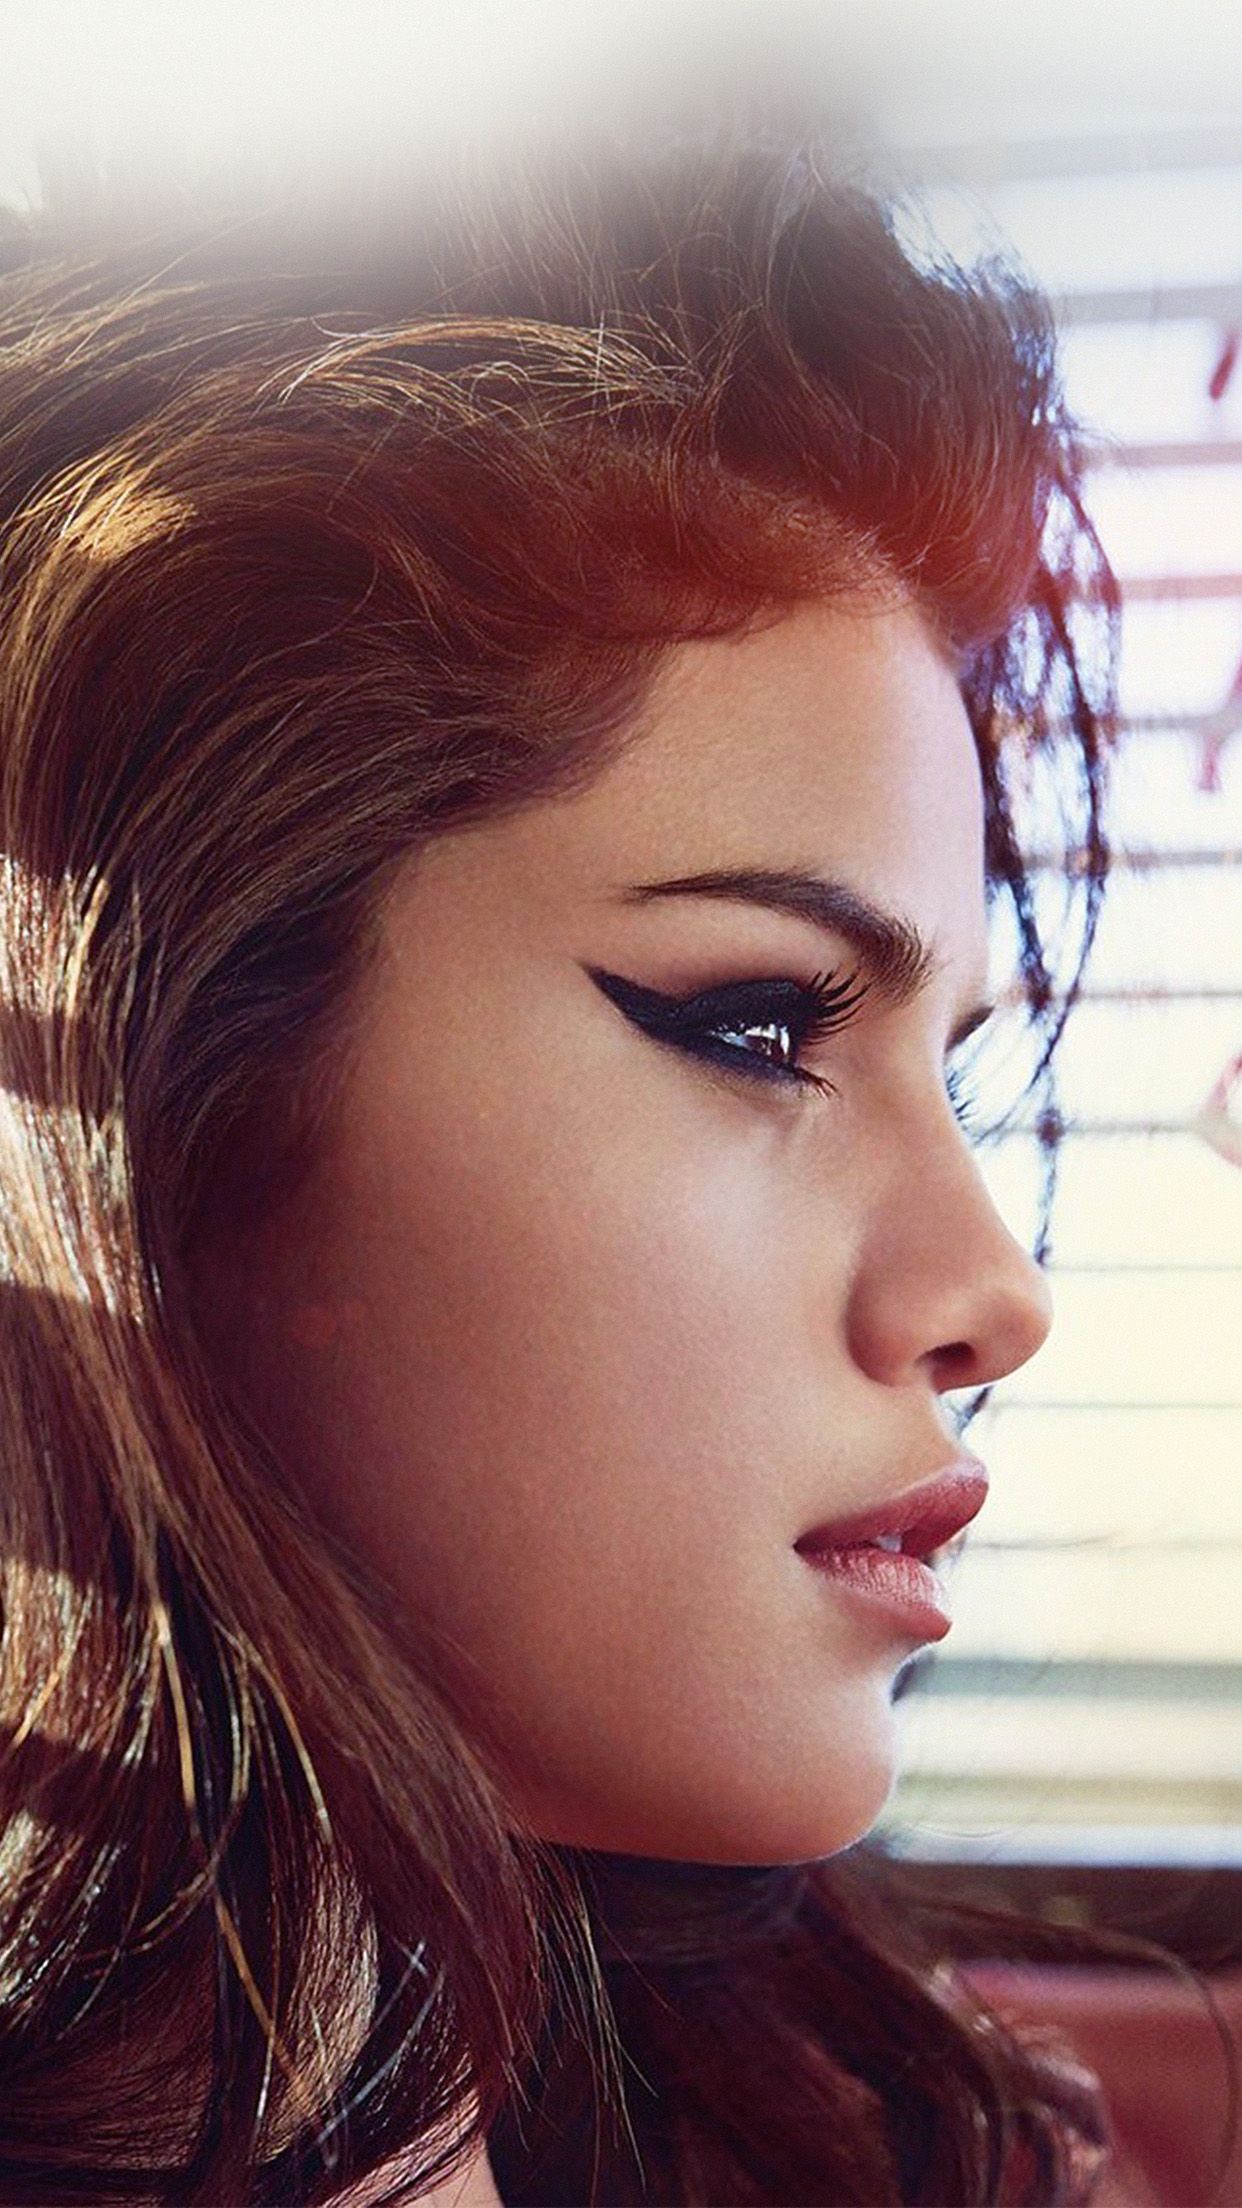 Selena Gomez Face Cute Android Wallpaper Wallpaper Selena